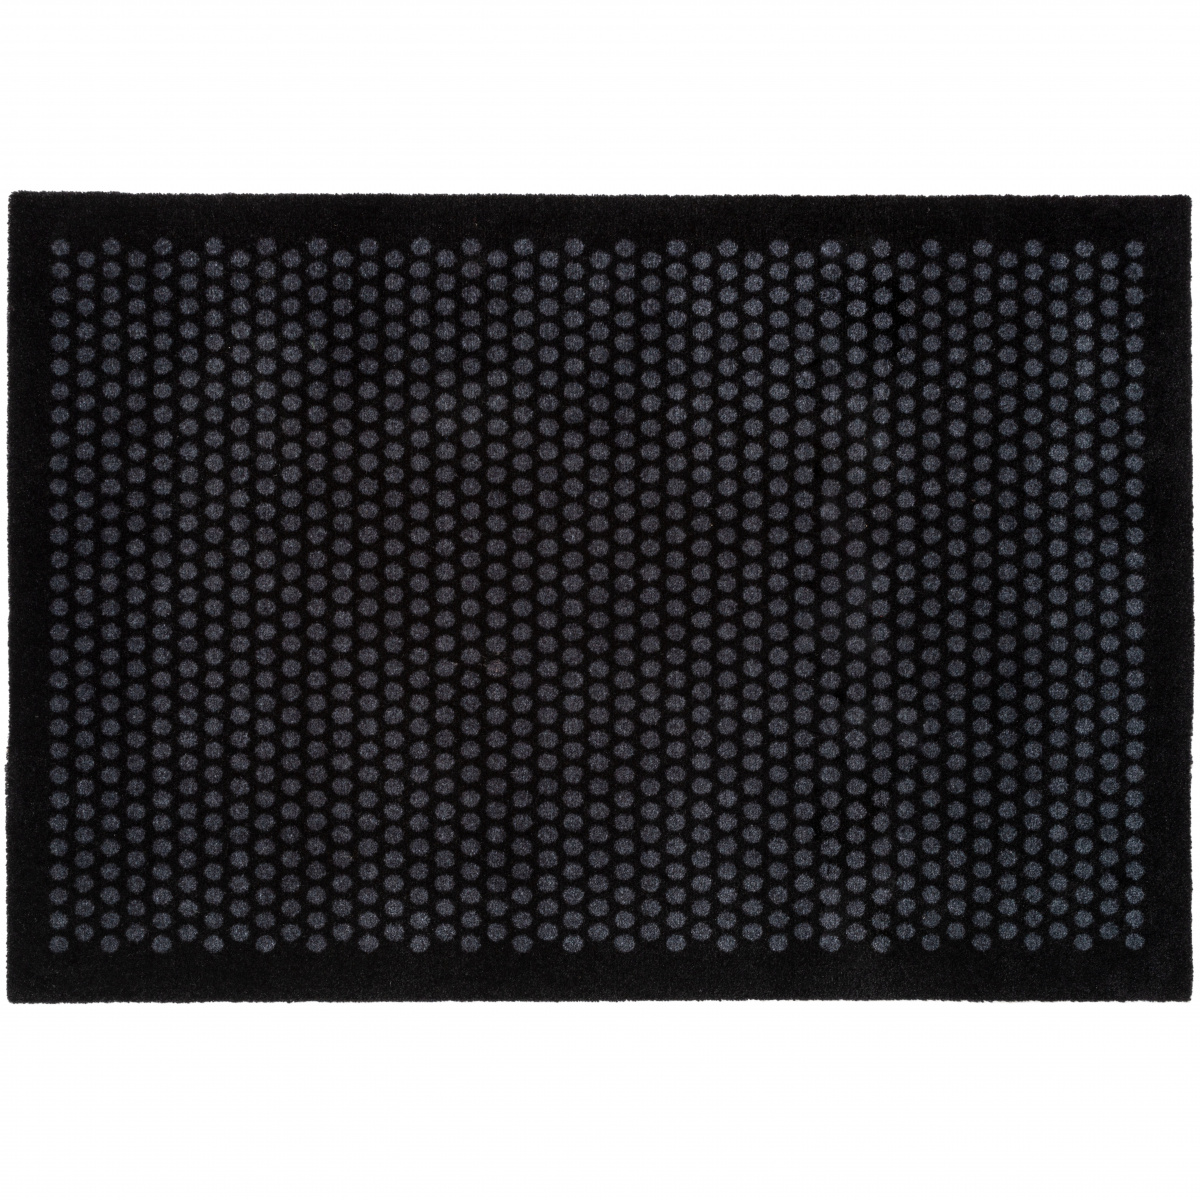 Tica door mat, dots/black - 90x130